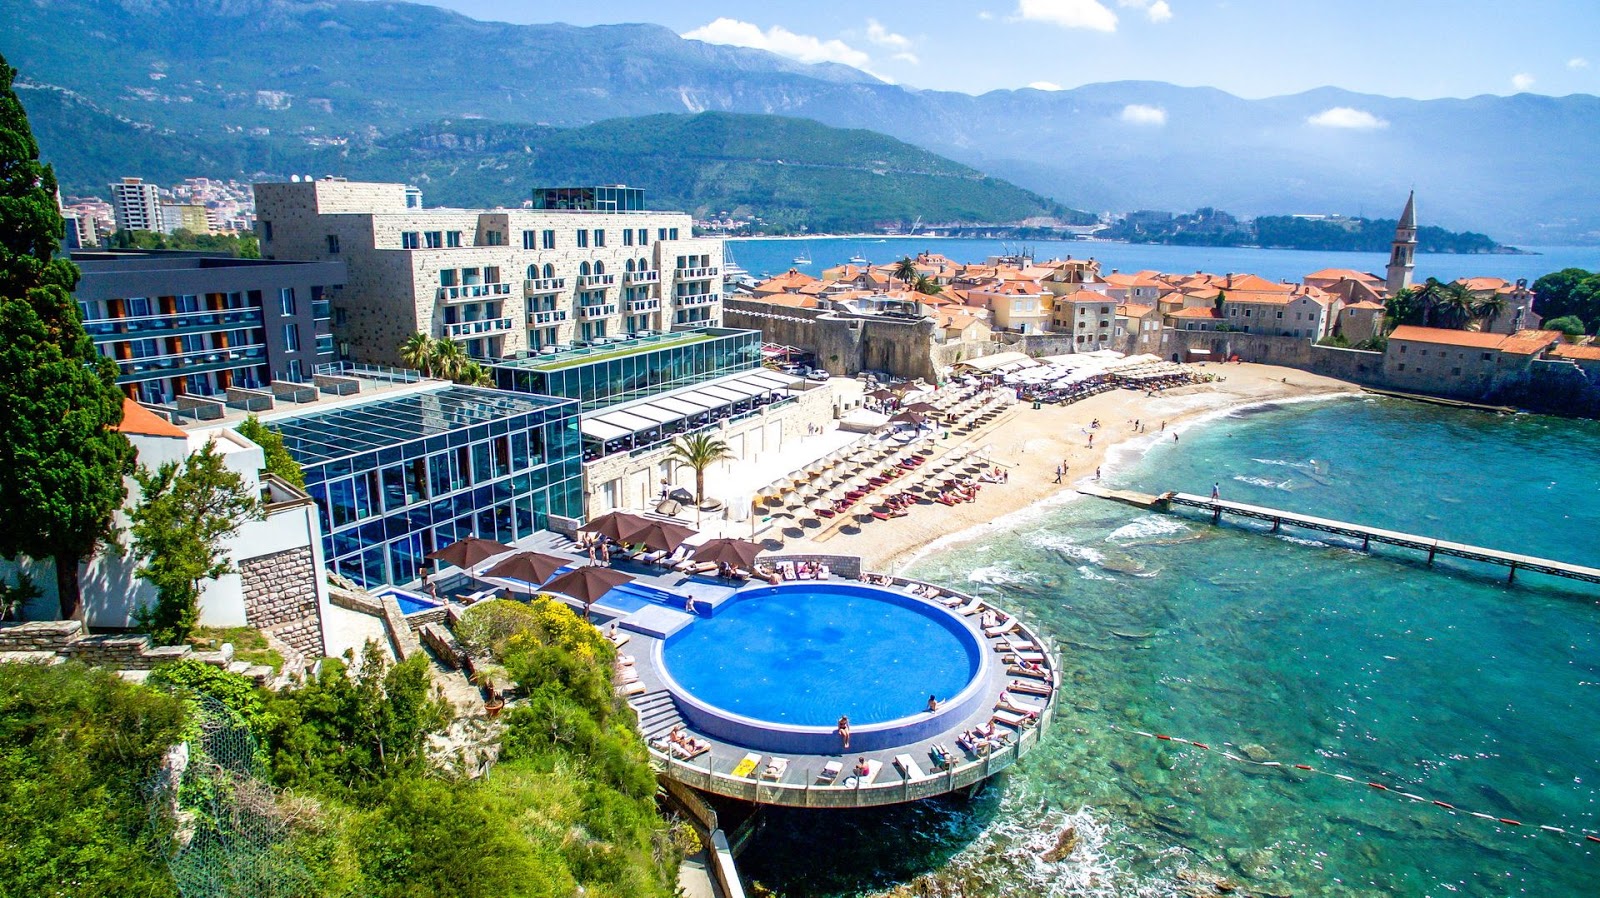 The Balkans Chronicle: Welcome to Budva, the tourist capital of Montenegro